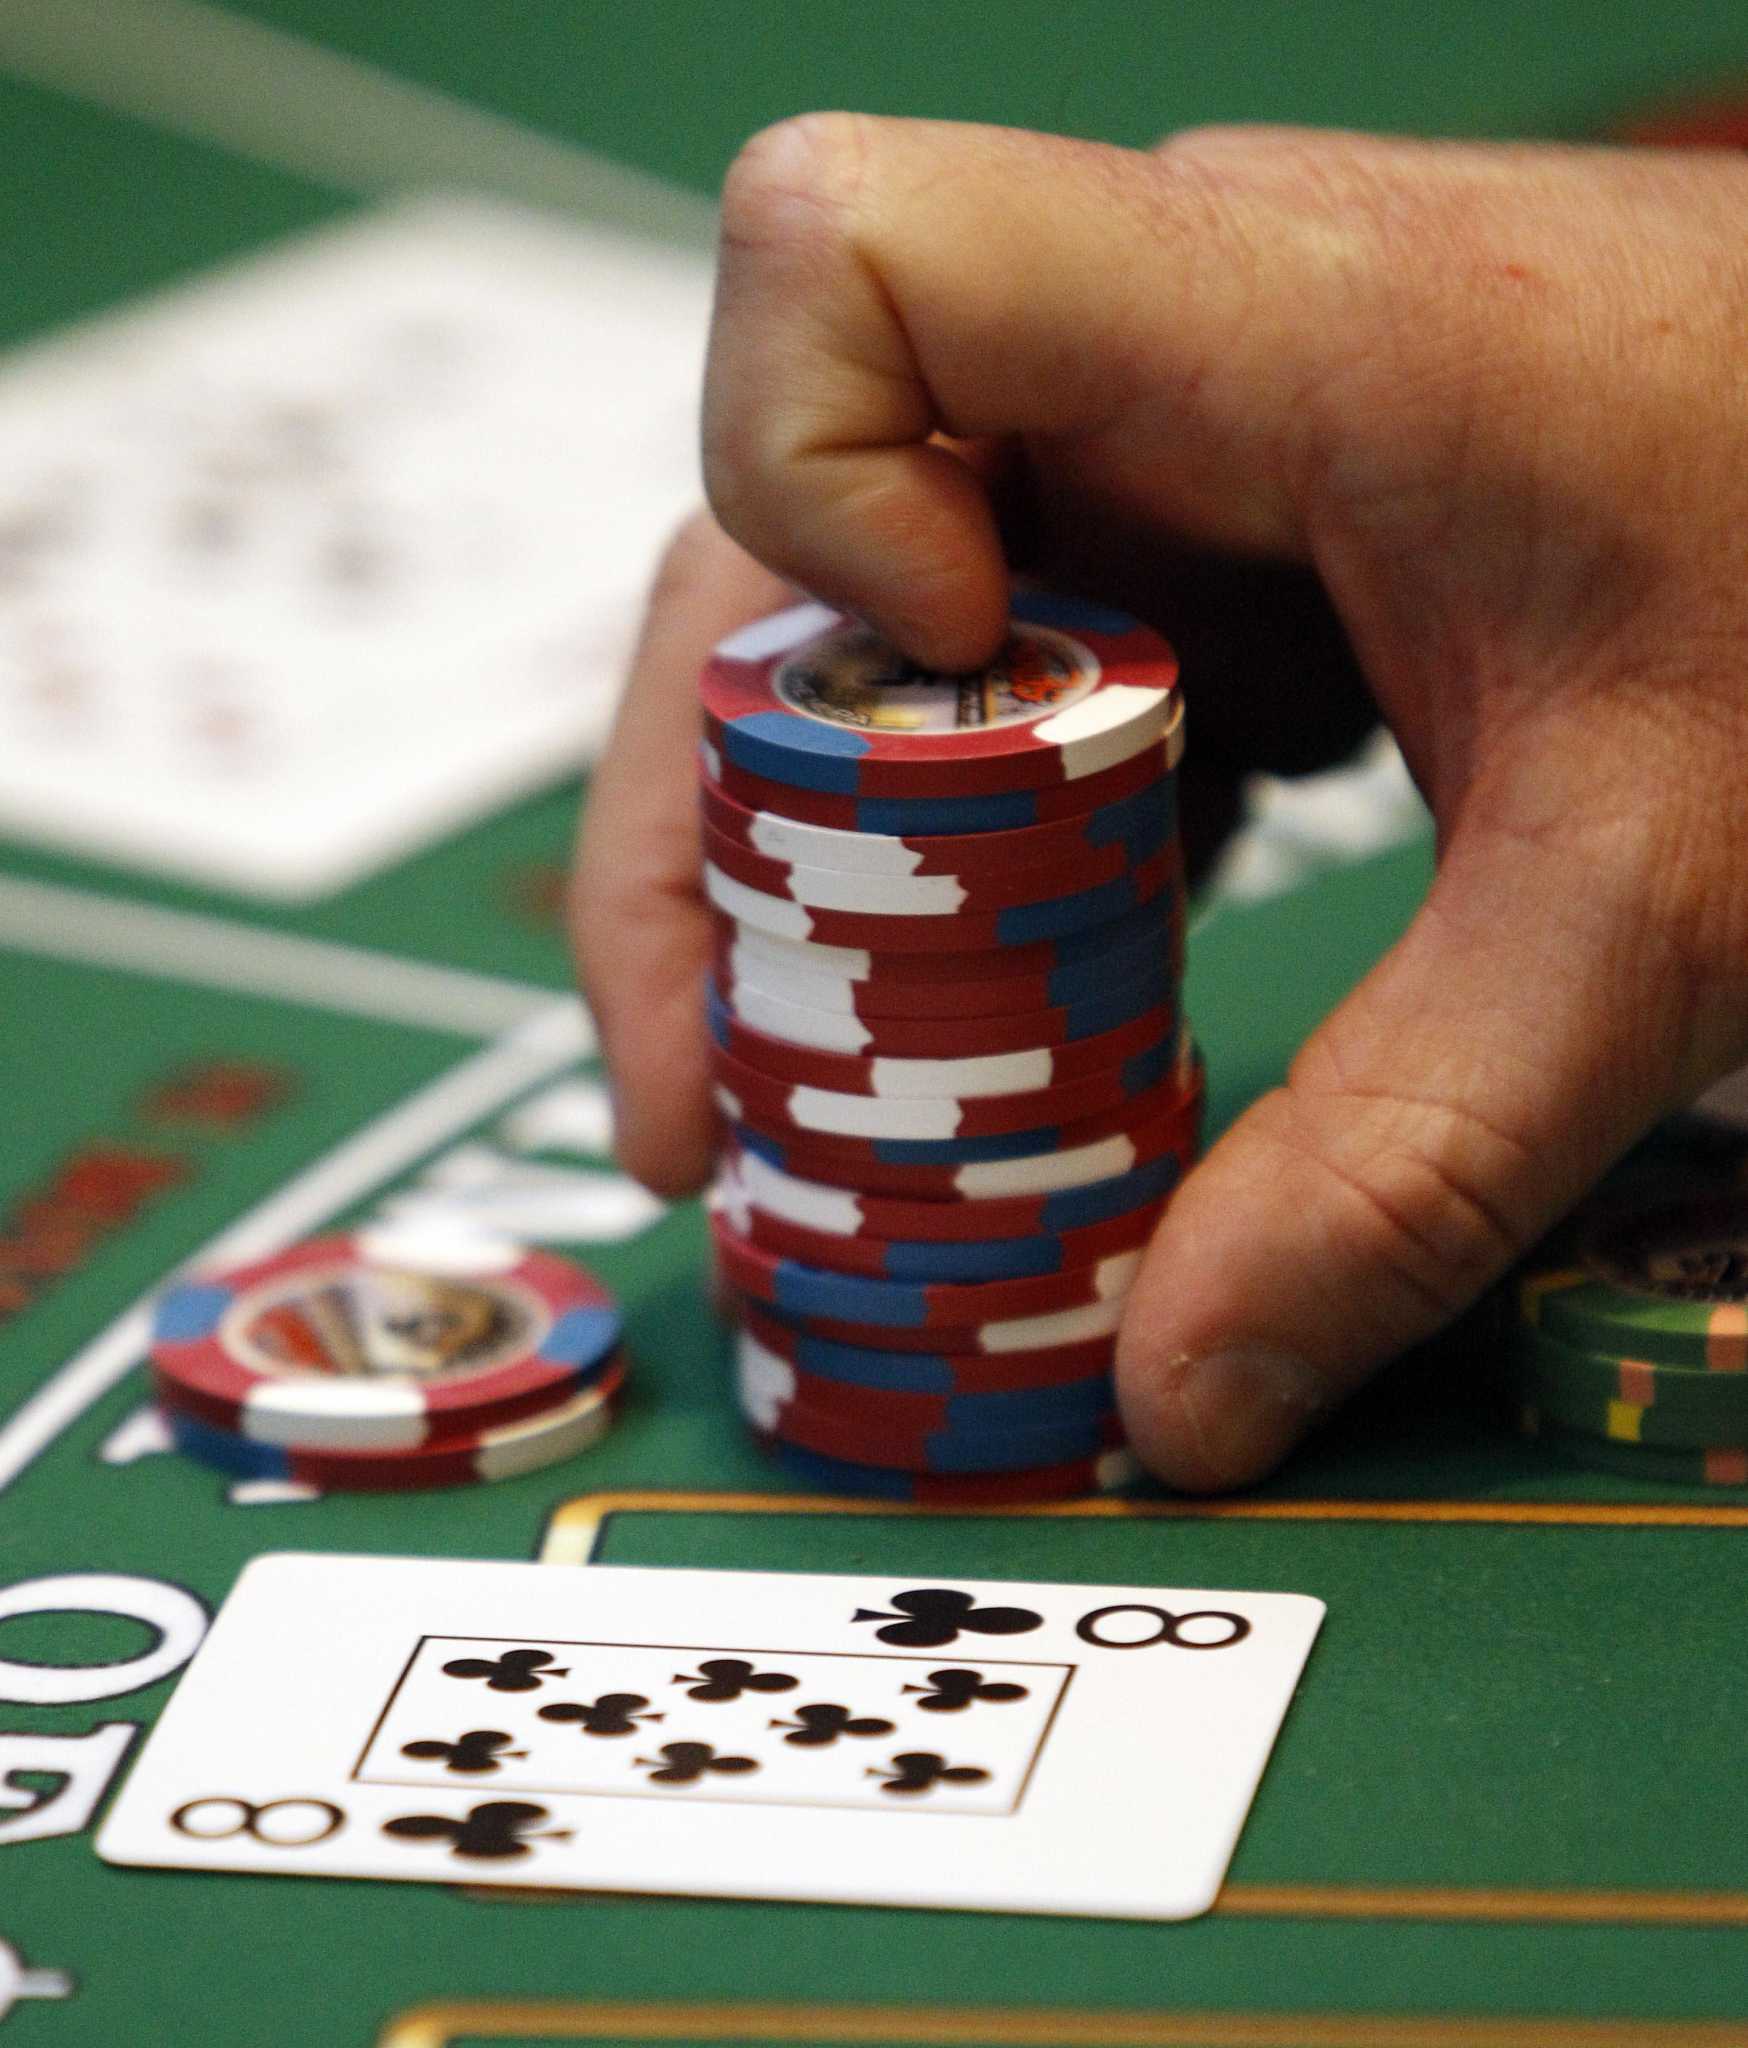 Pemain poker Shelton gagal melaporkan lebih dari $ 1 juta dalam kemenangan judi